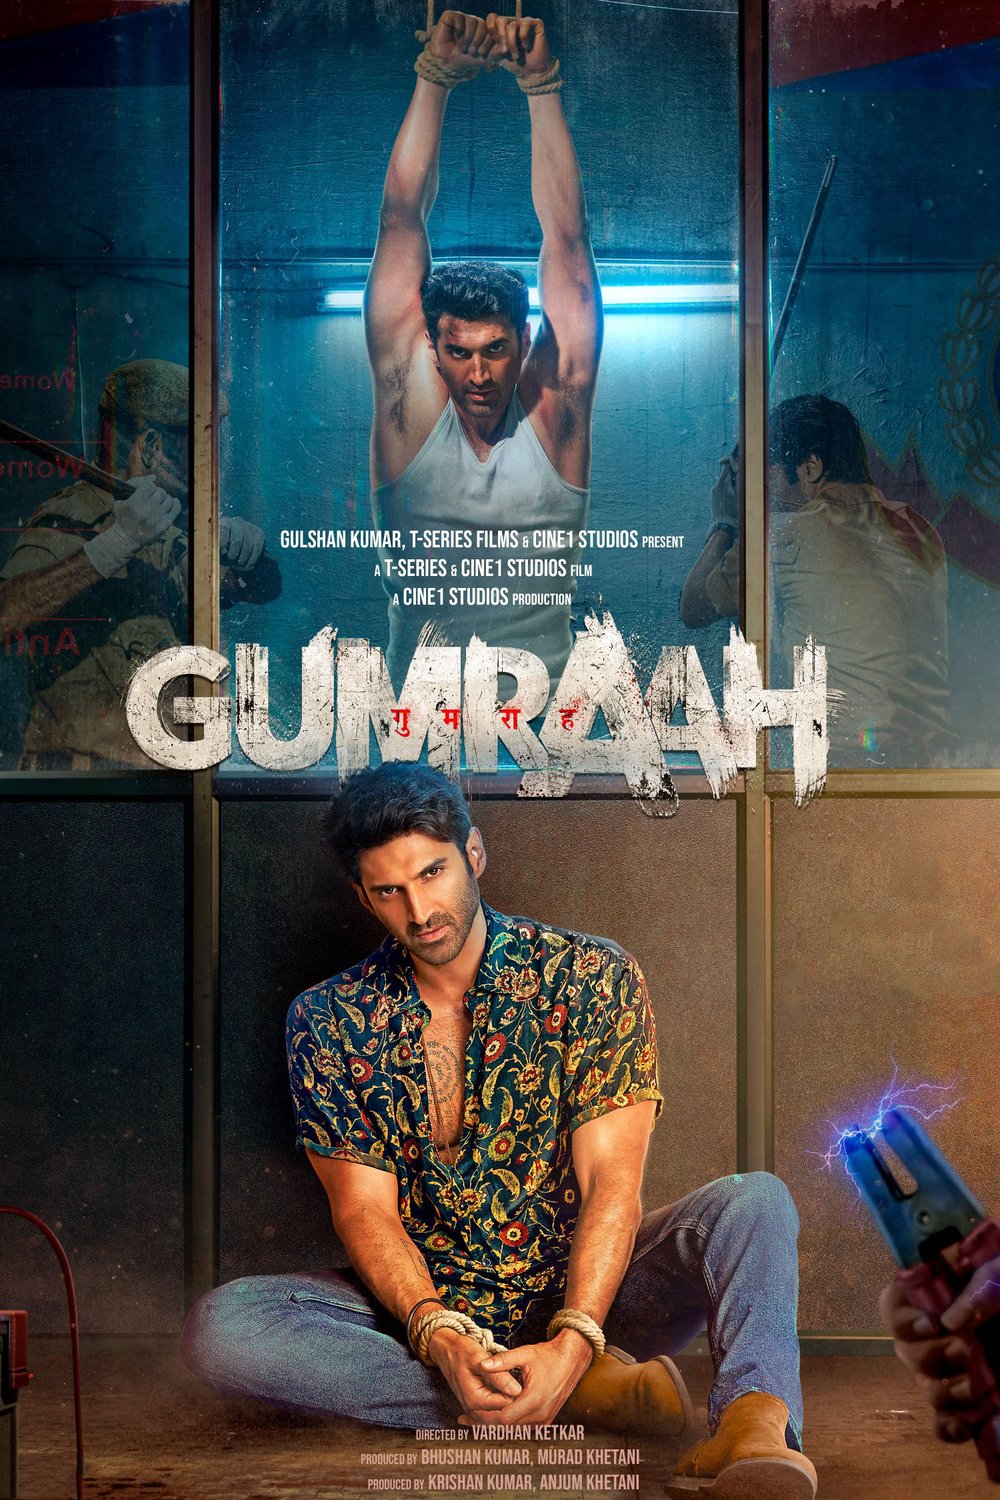 Hindi poster of the movie Gumraah